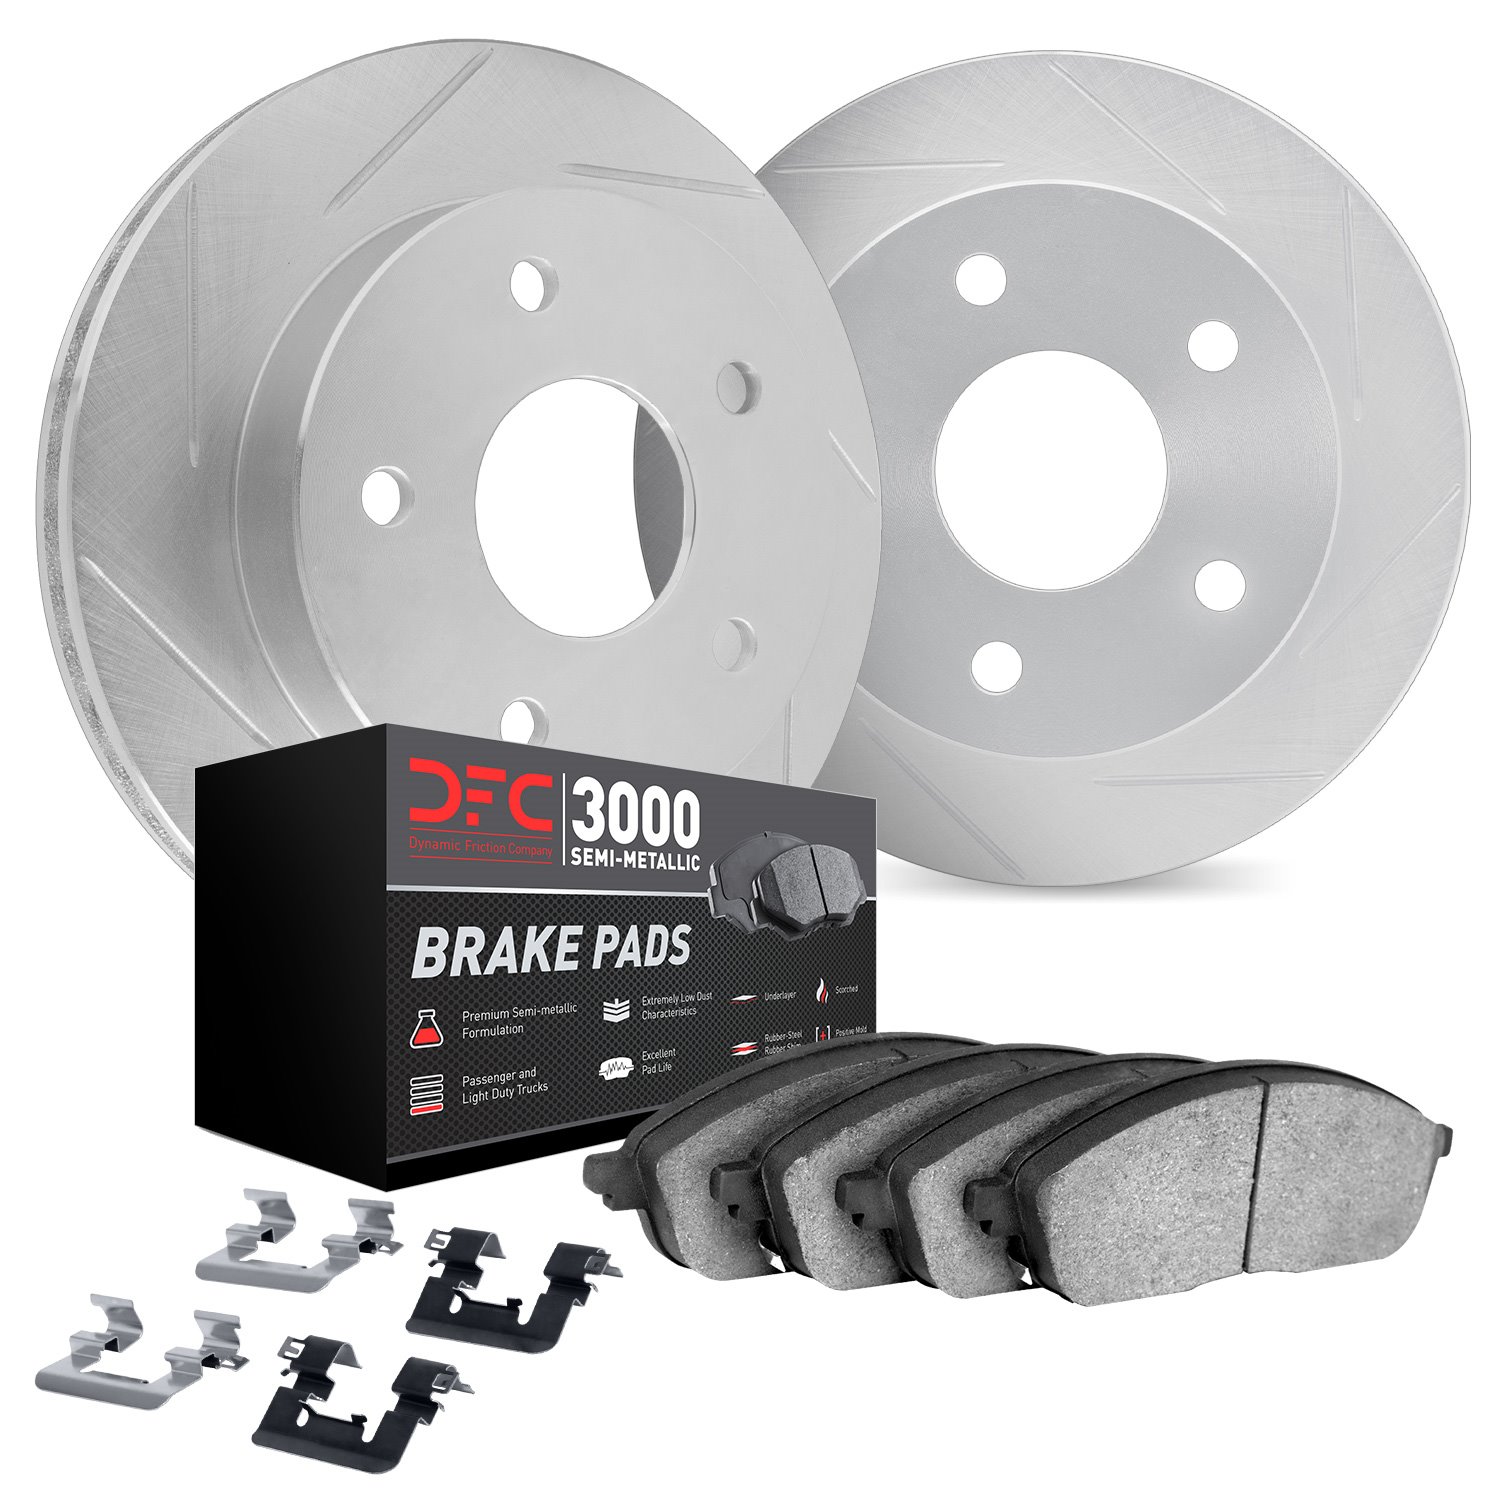 5112-39026 Slotted Brake Rotors with 3000-Series Semi-Metallic Brake Pads Kit & Hardware [Silver], Fits Select Multiple Makes/Mo